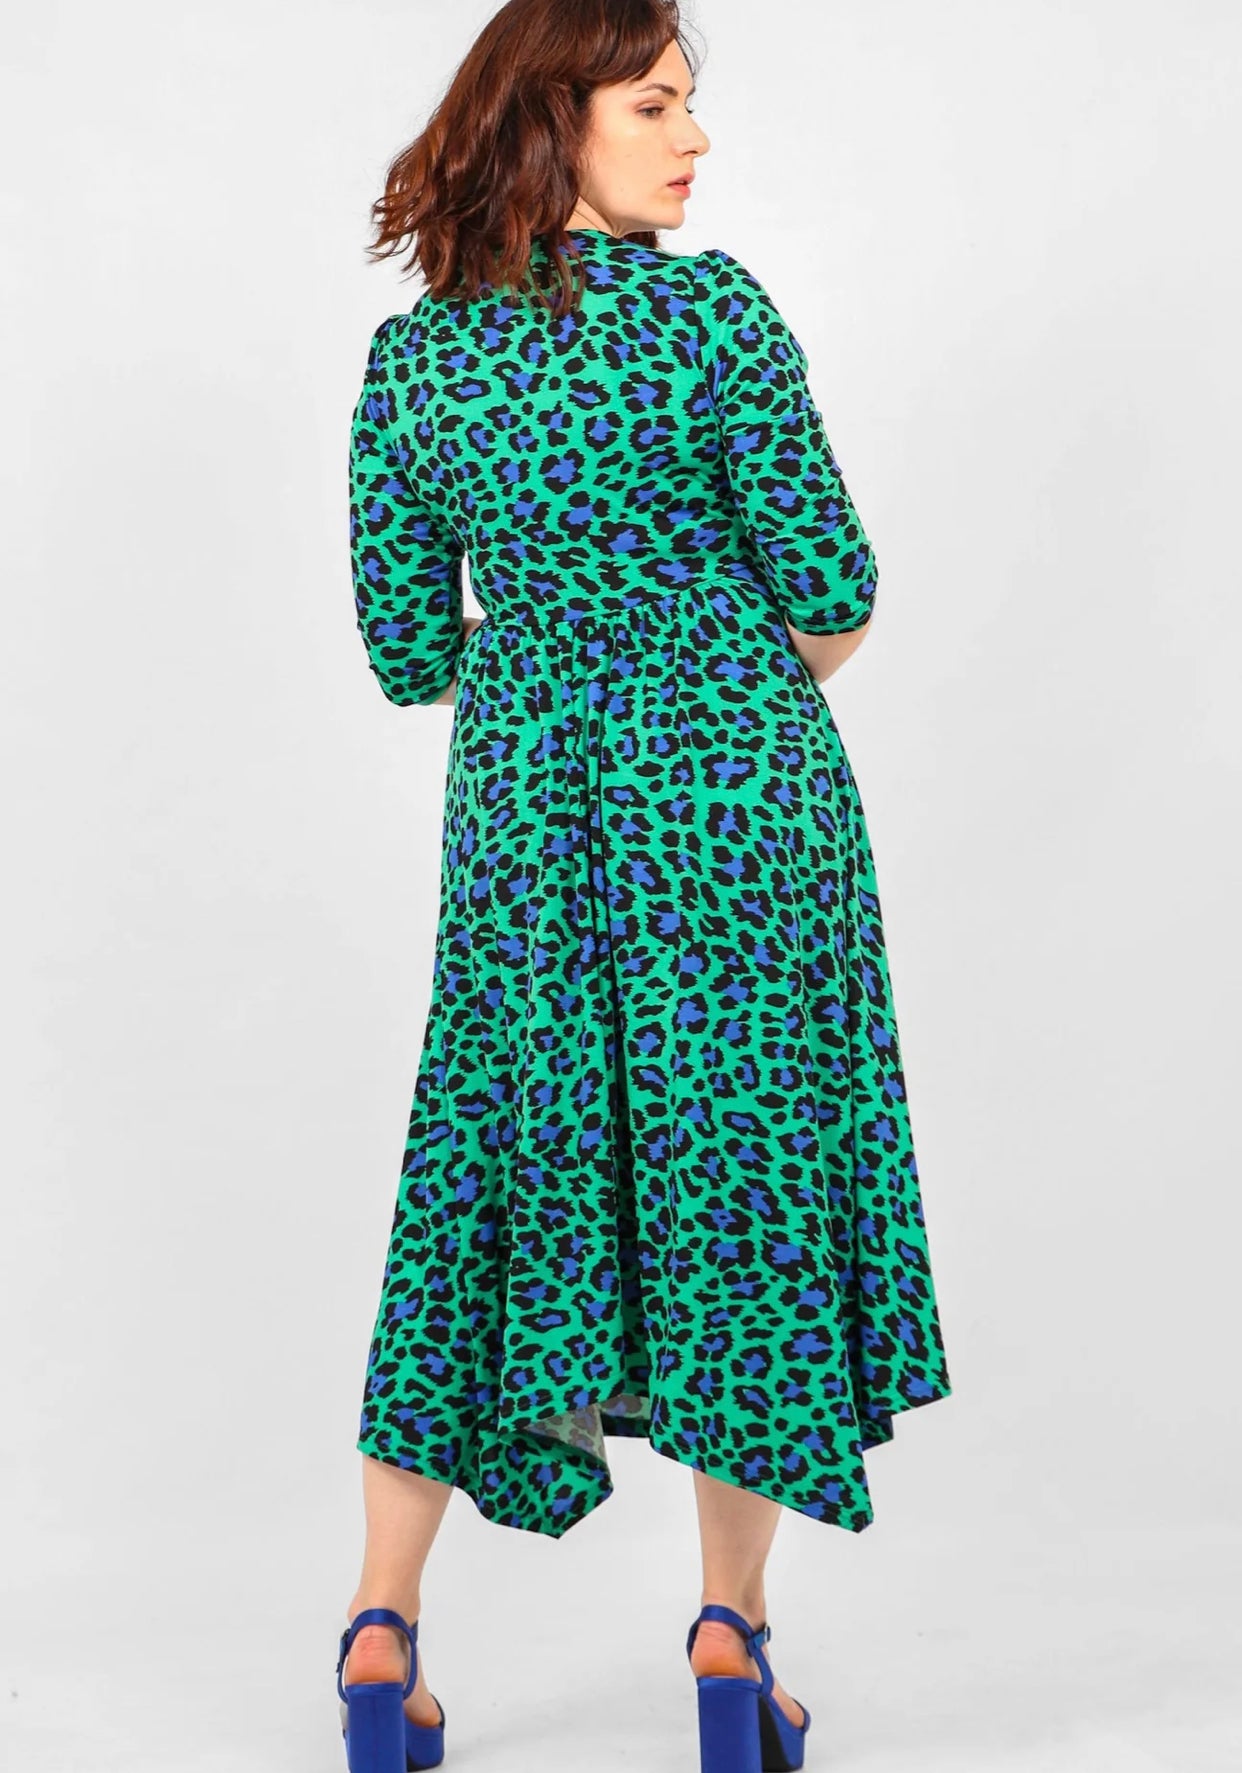 Leopard Knot Front Dress - Green